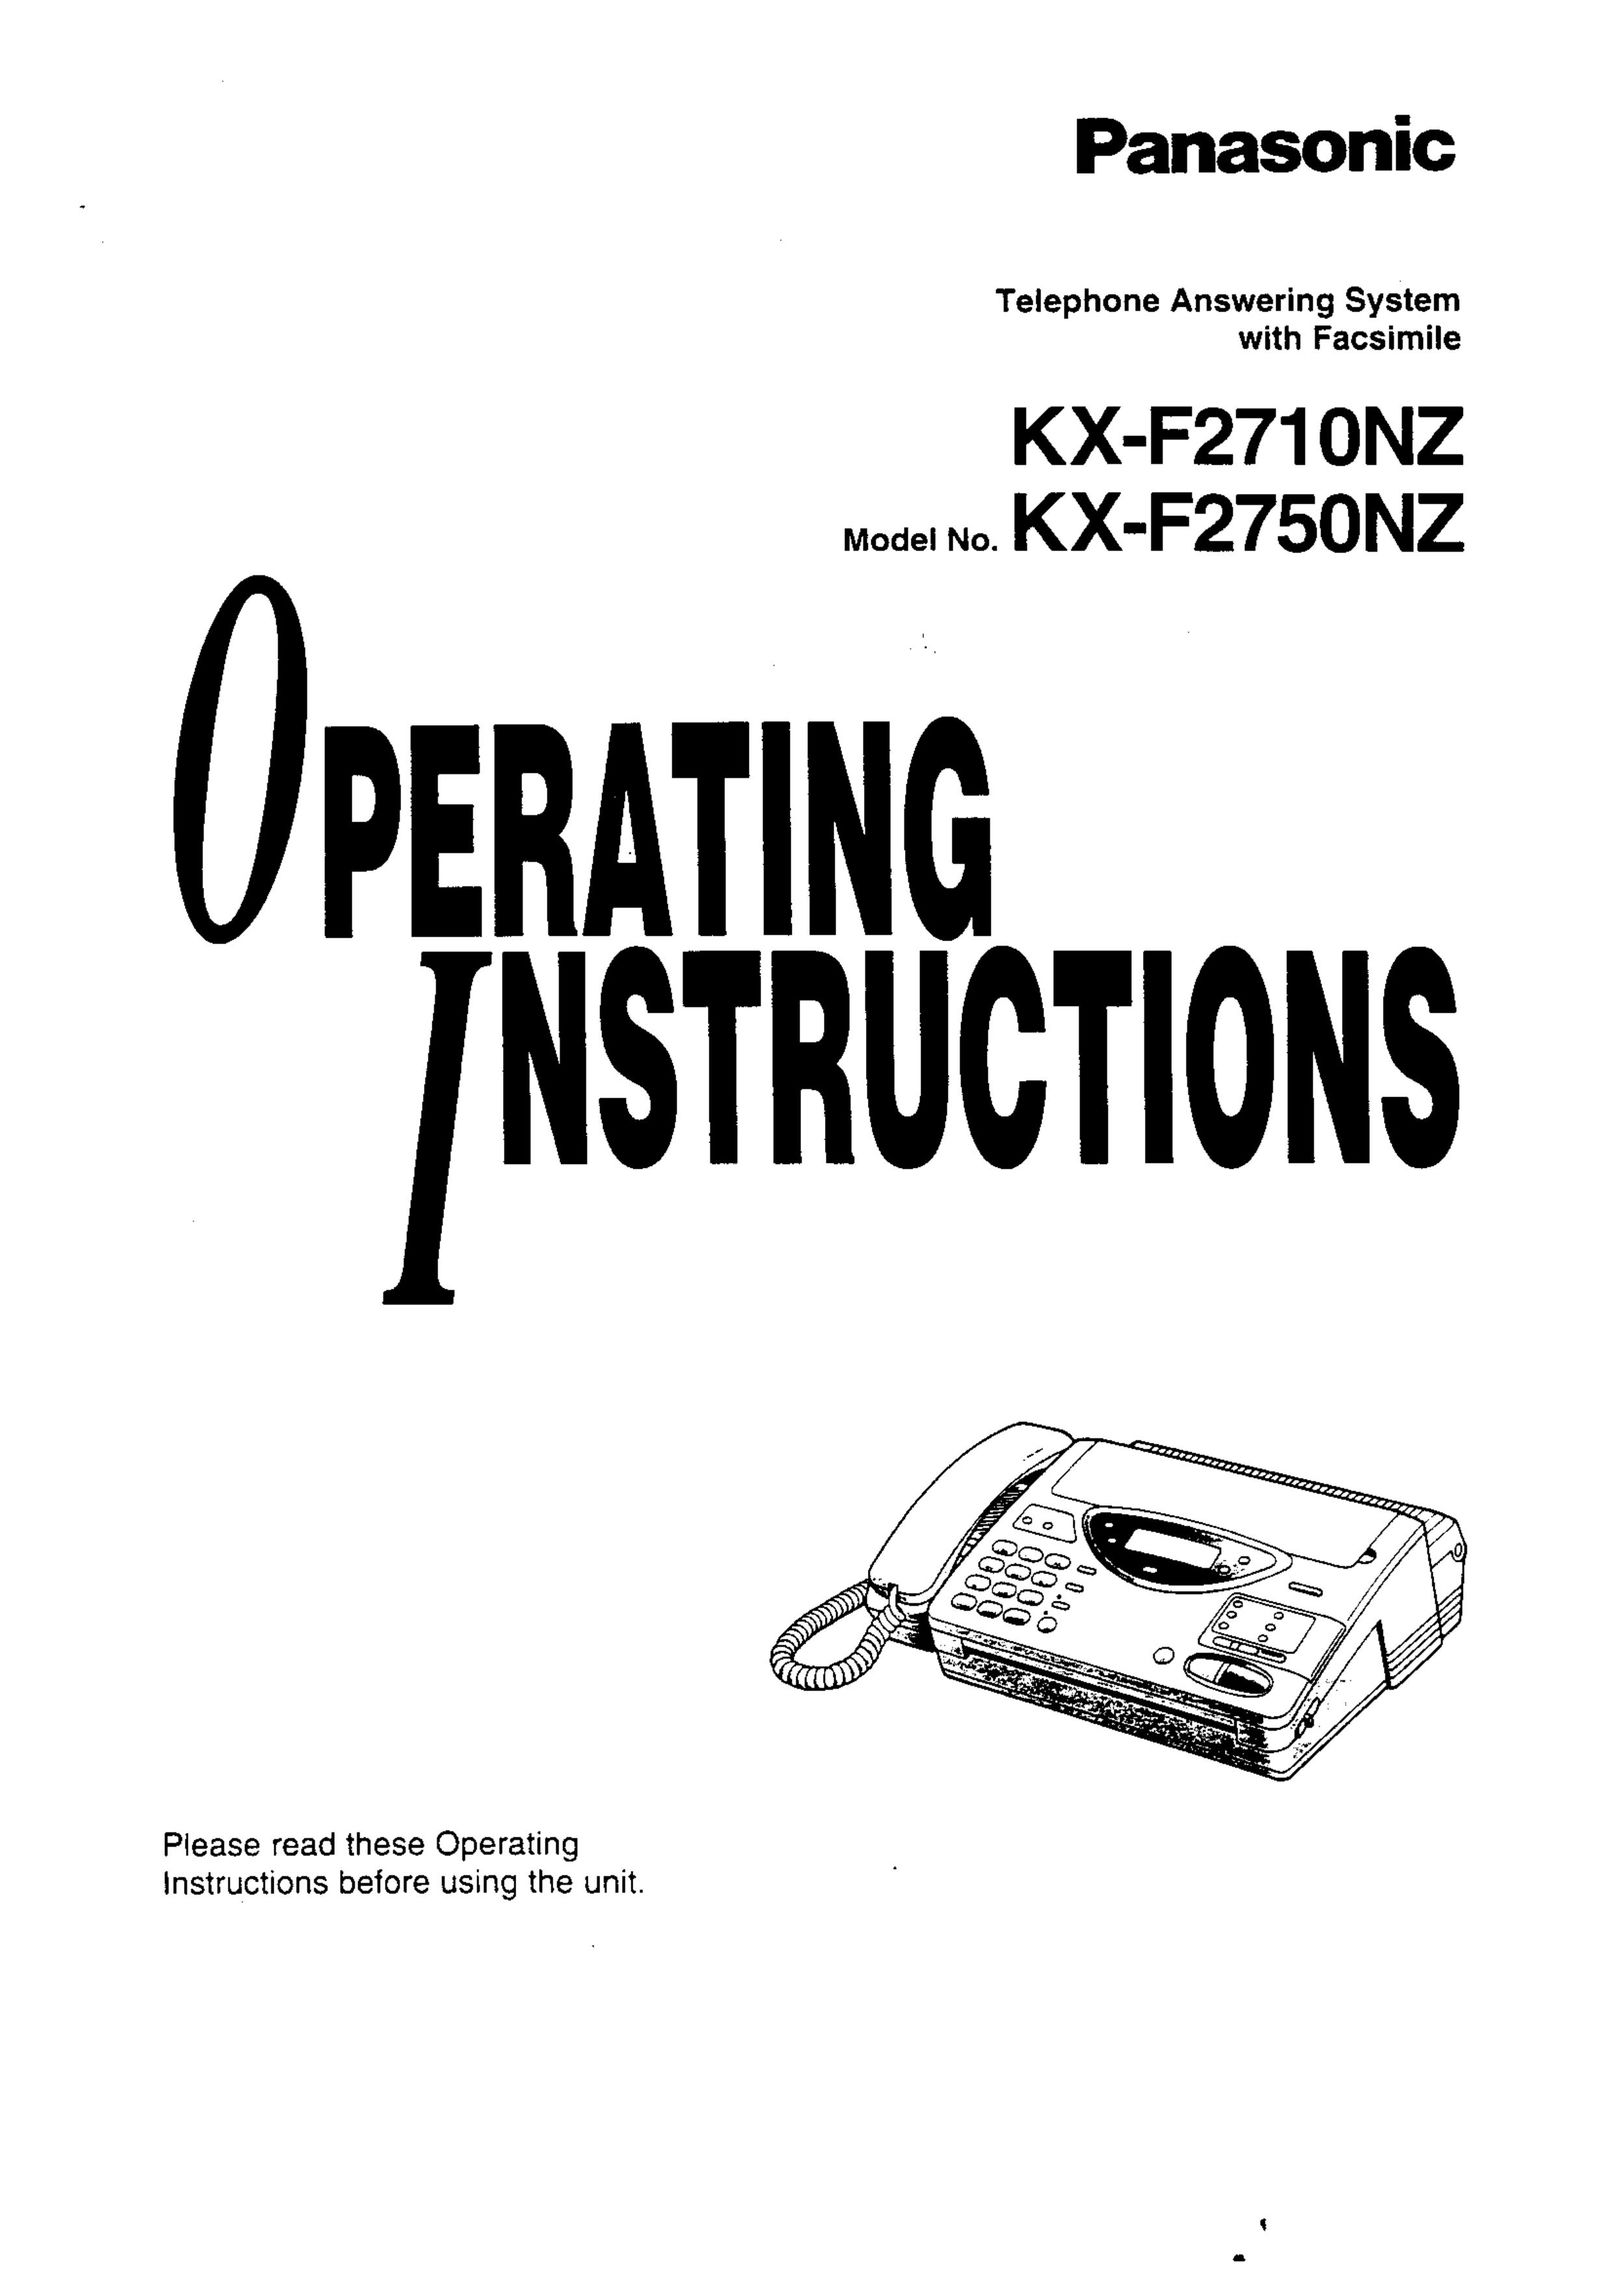 Panasonic KX-F2750NZ Answering Machine User Manual